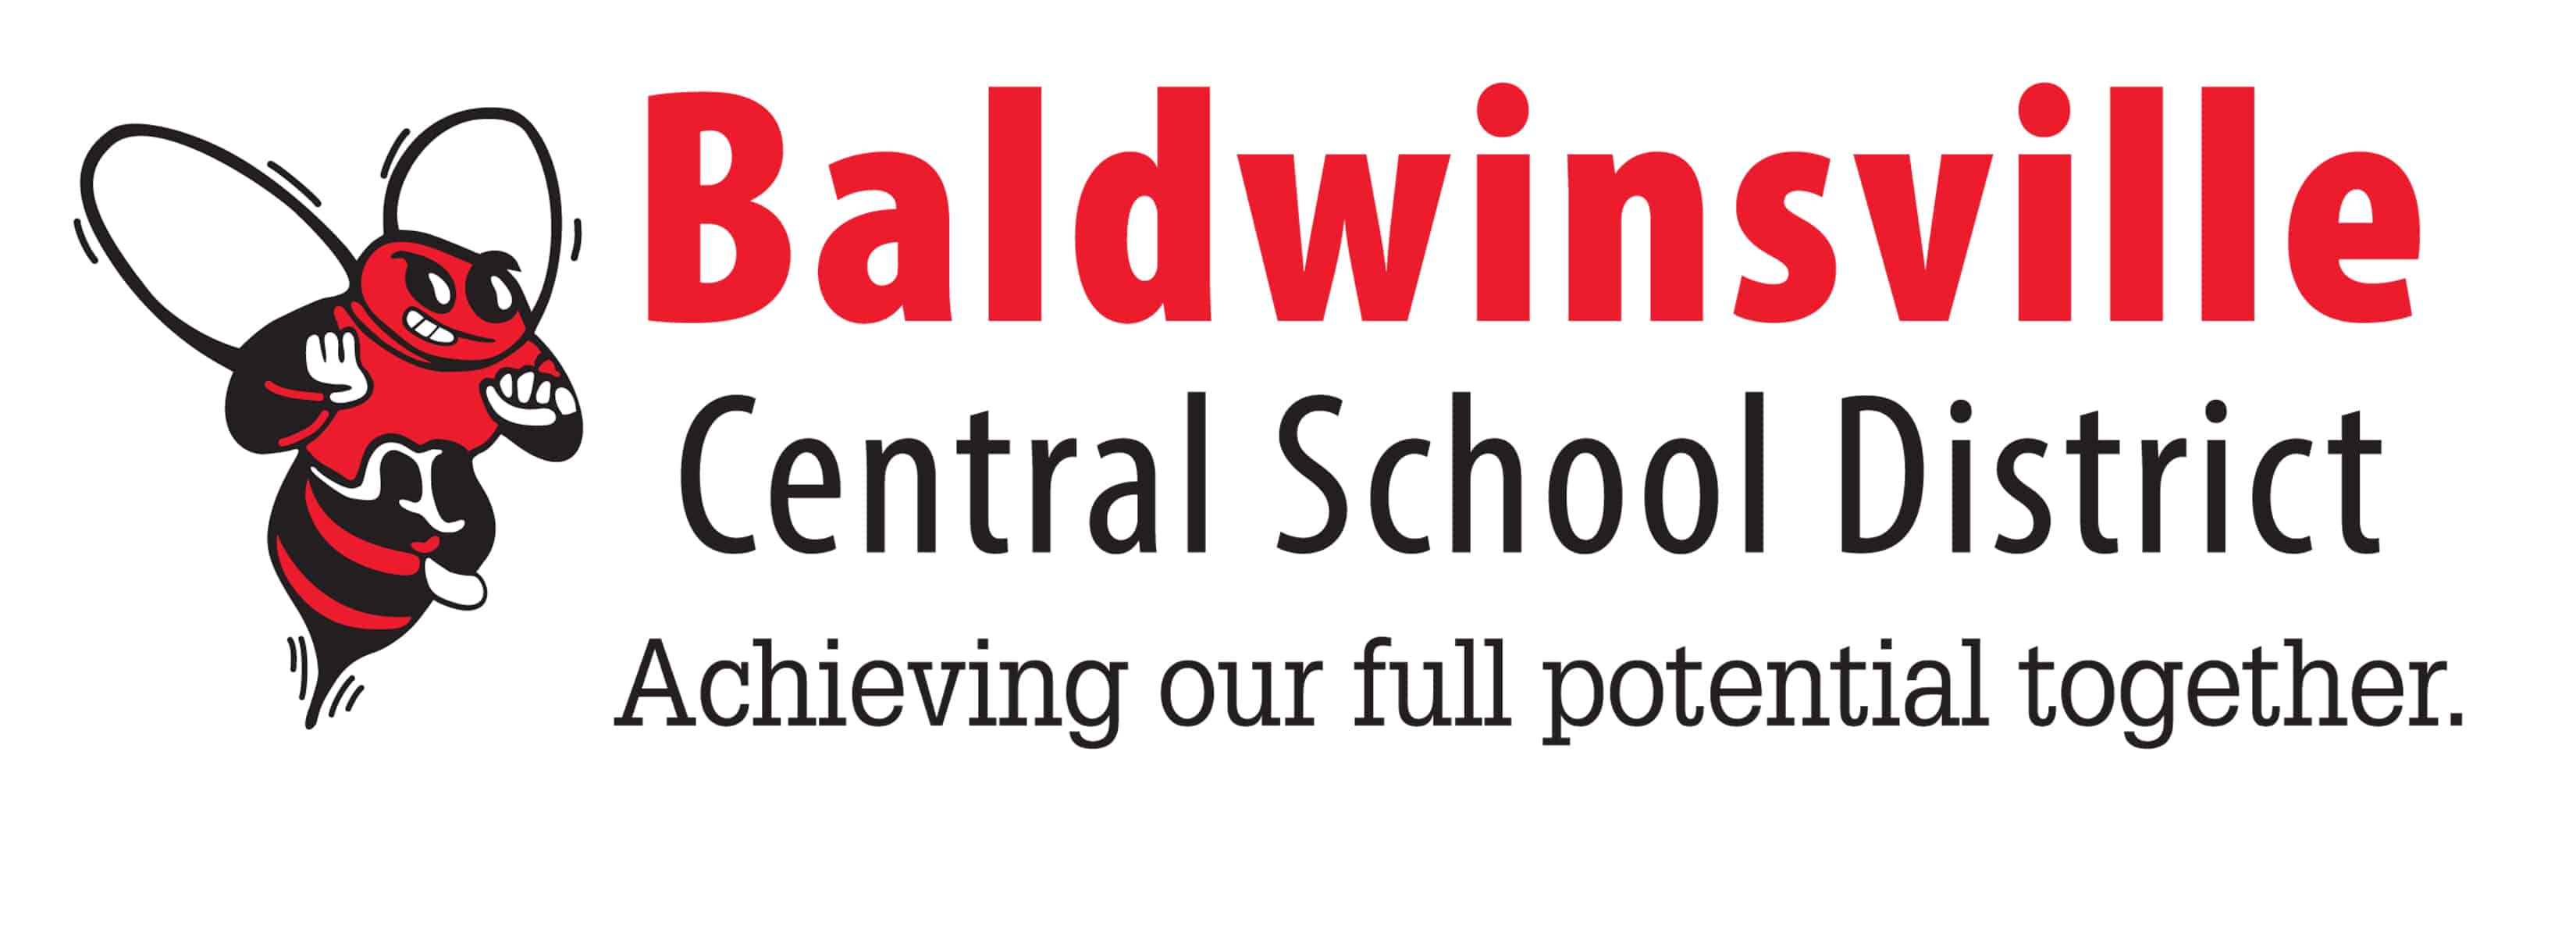 Baldwinsville Central School District log